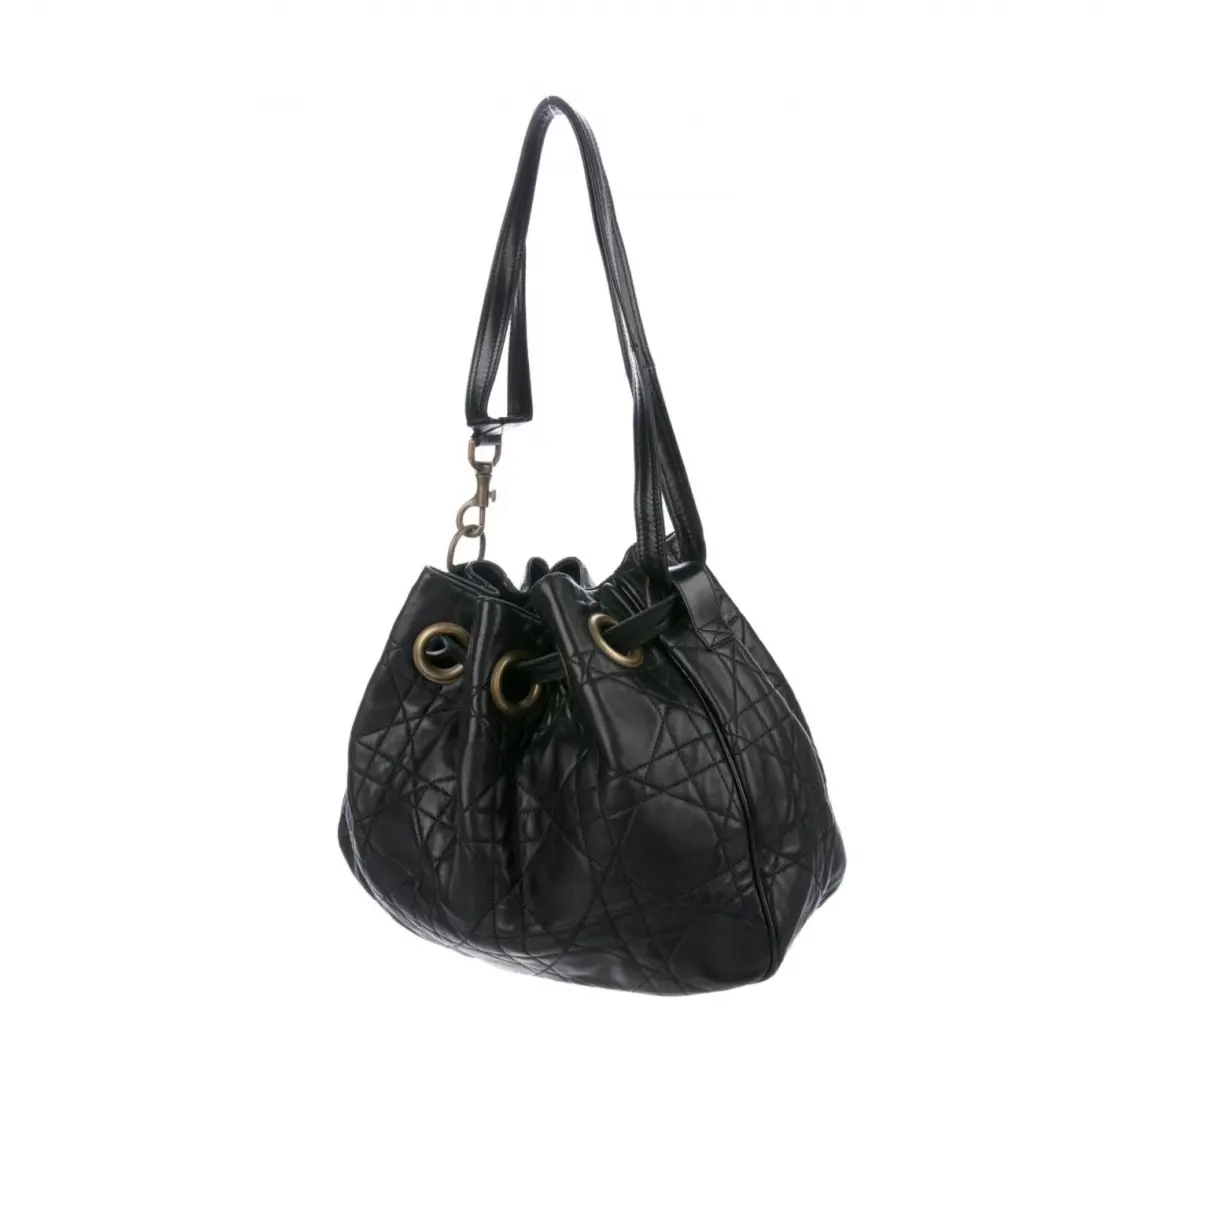 Buy Dior Drawstring leather handbag online